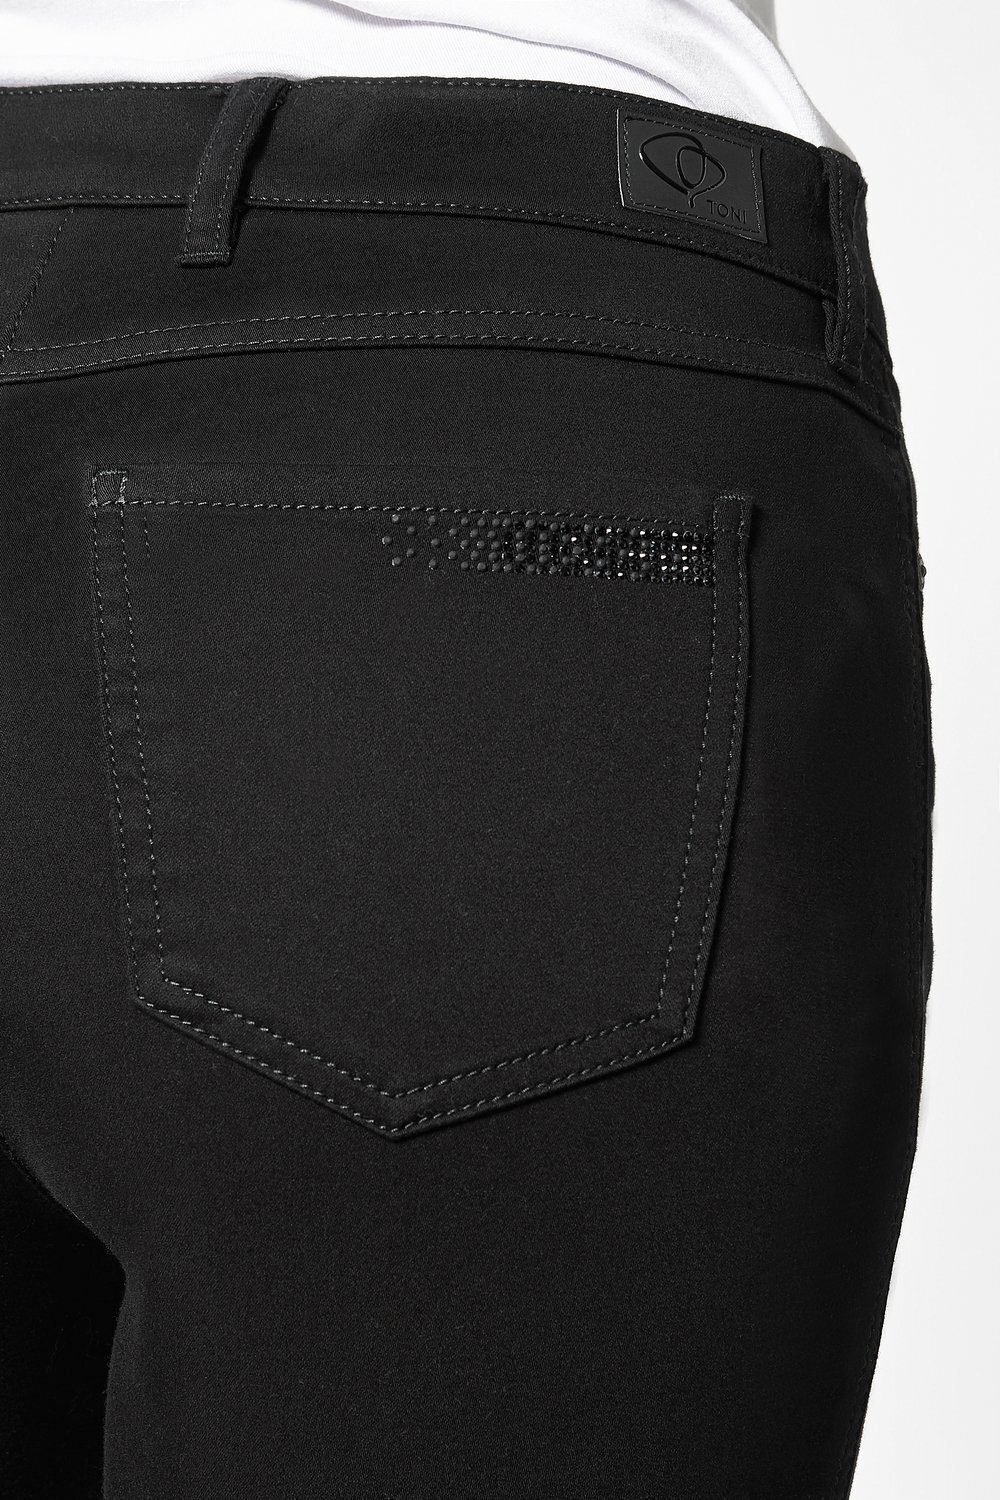 TONI 5-Pocket-Hose be loved mit hoher 089 schwarz Leibhöhe 